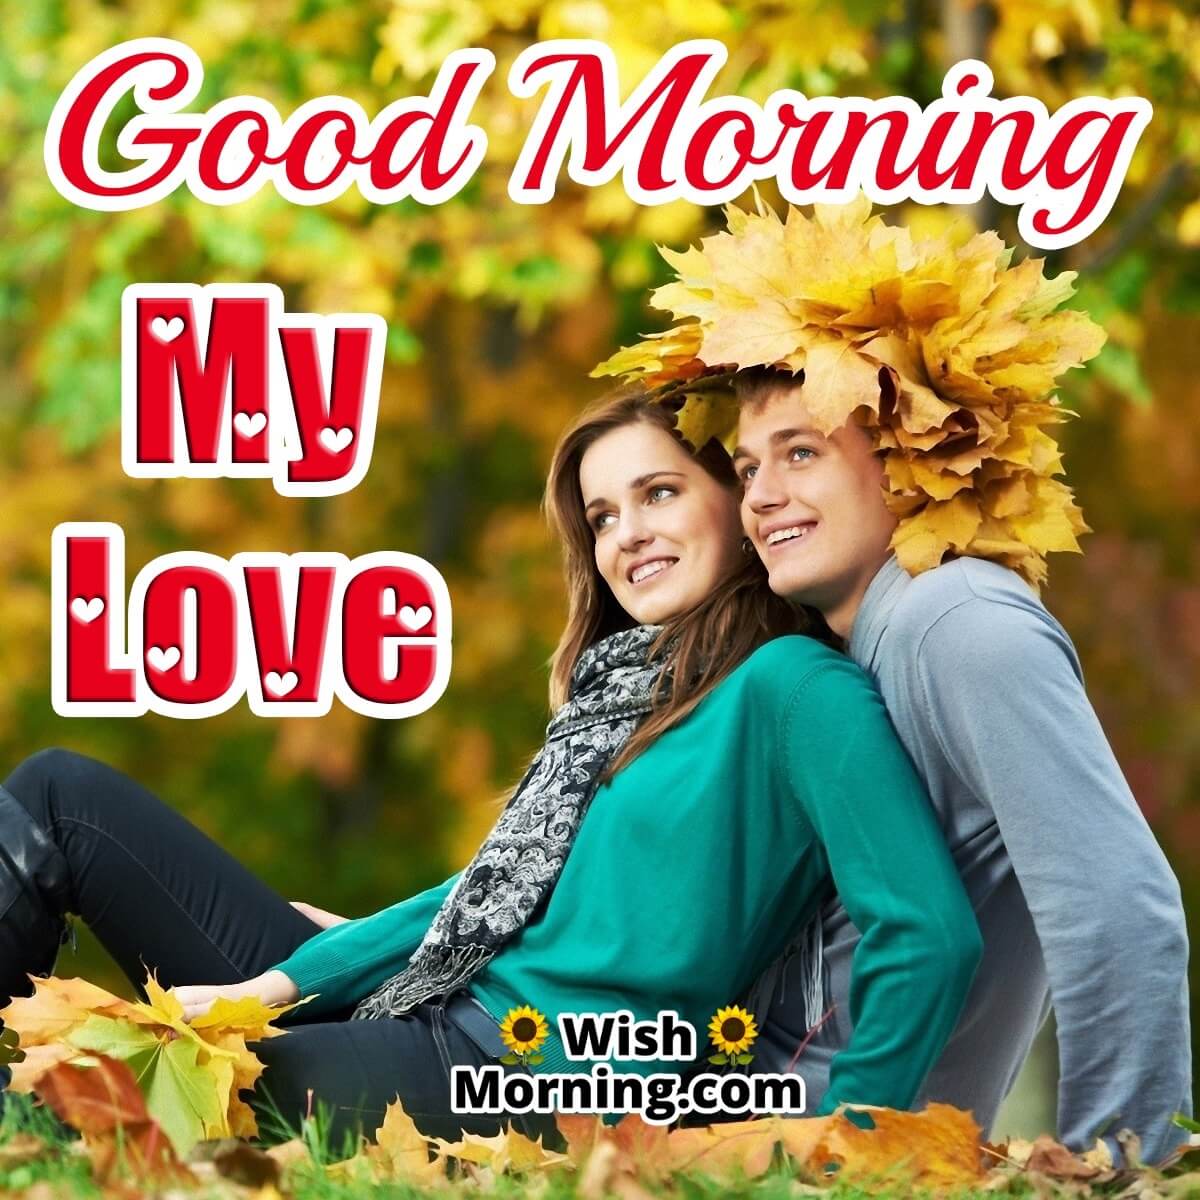 Romantic Good Morning Images - Wish Morning